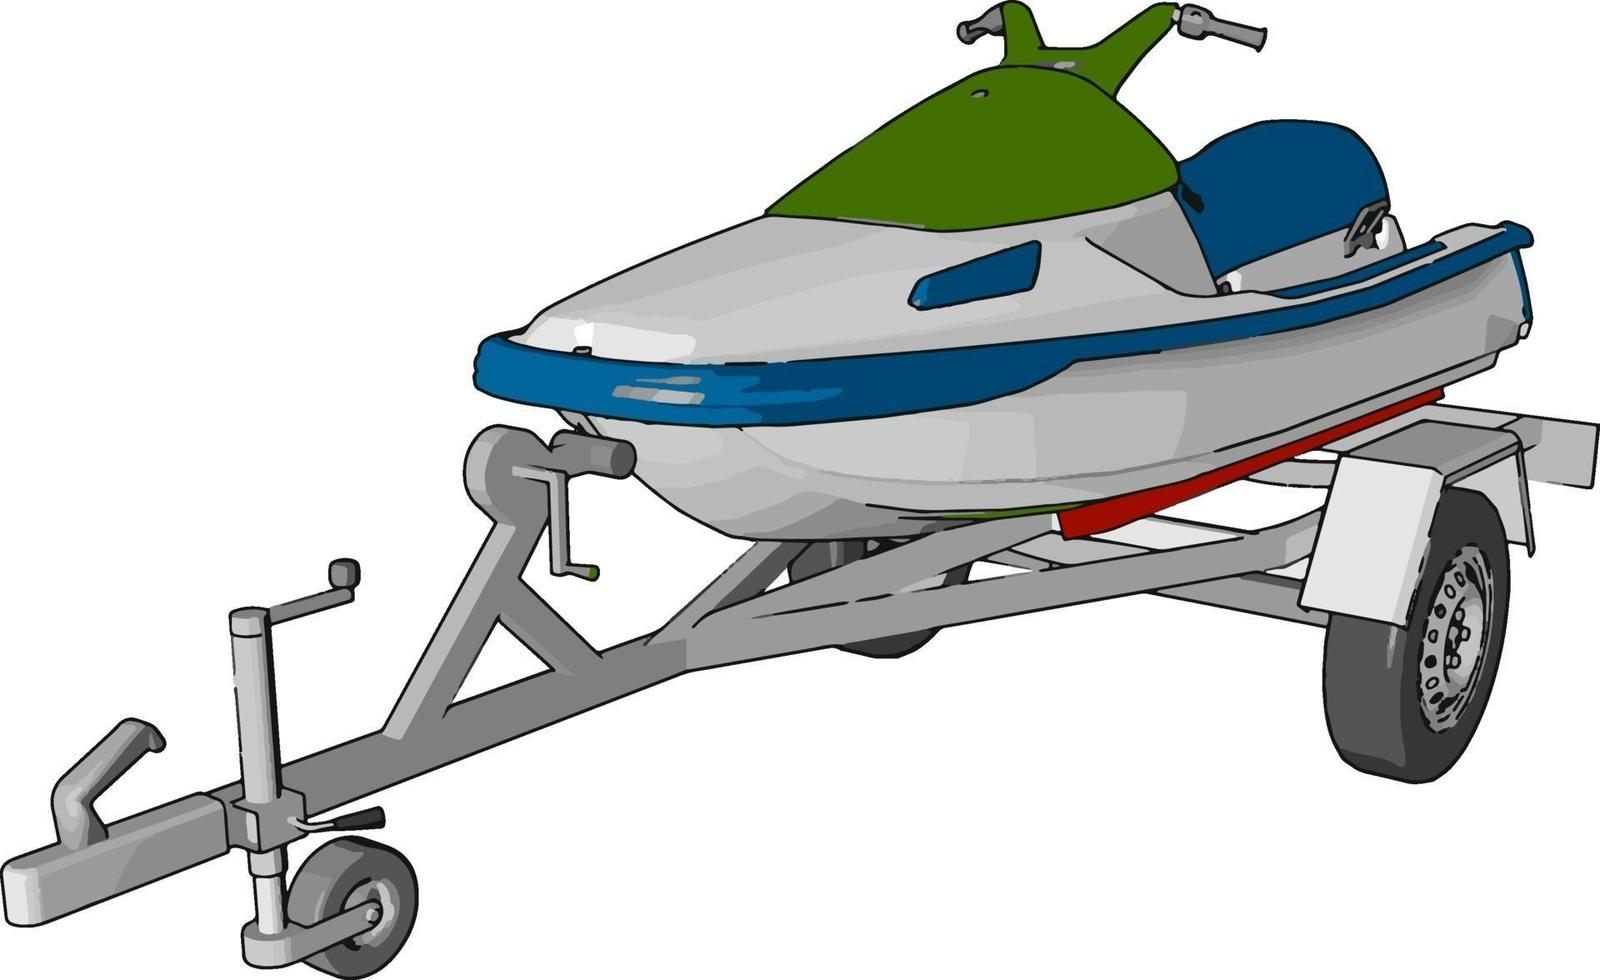 grön Jet ski, illustration, vektor på vit bakgrund.